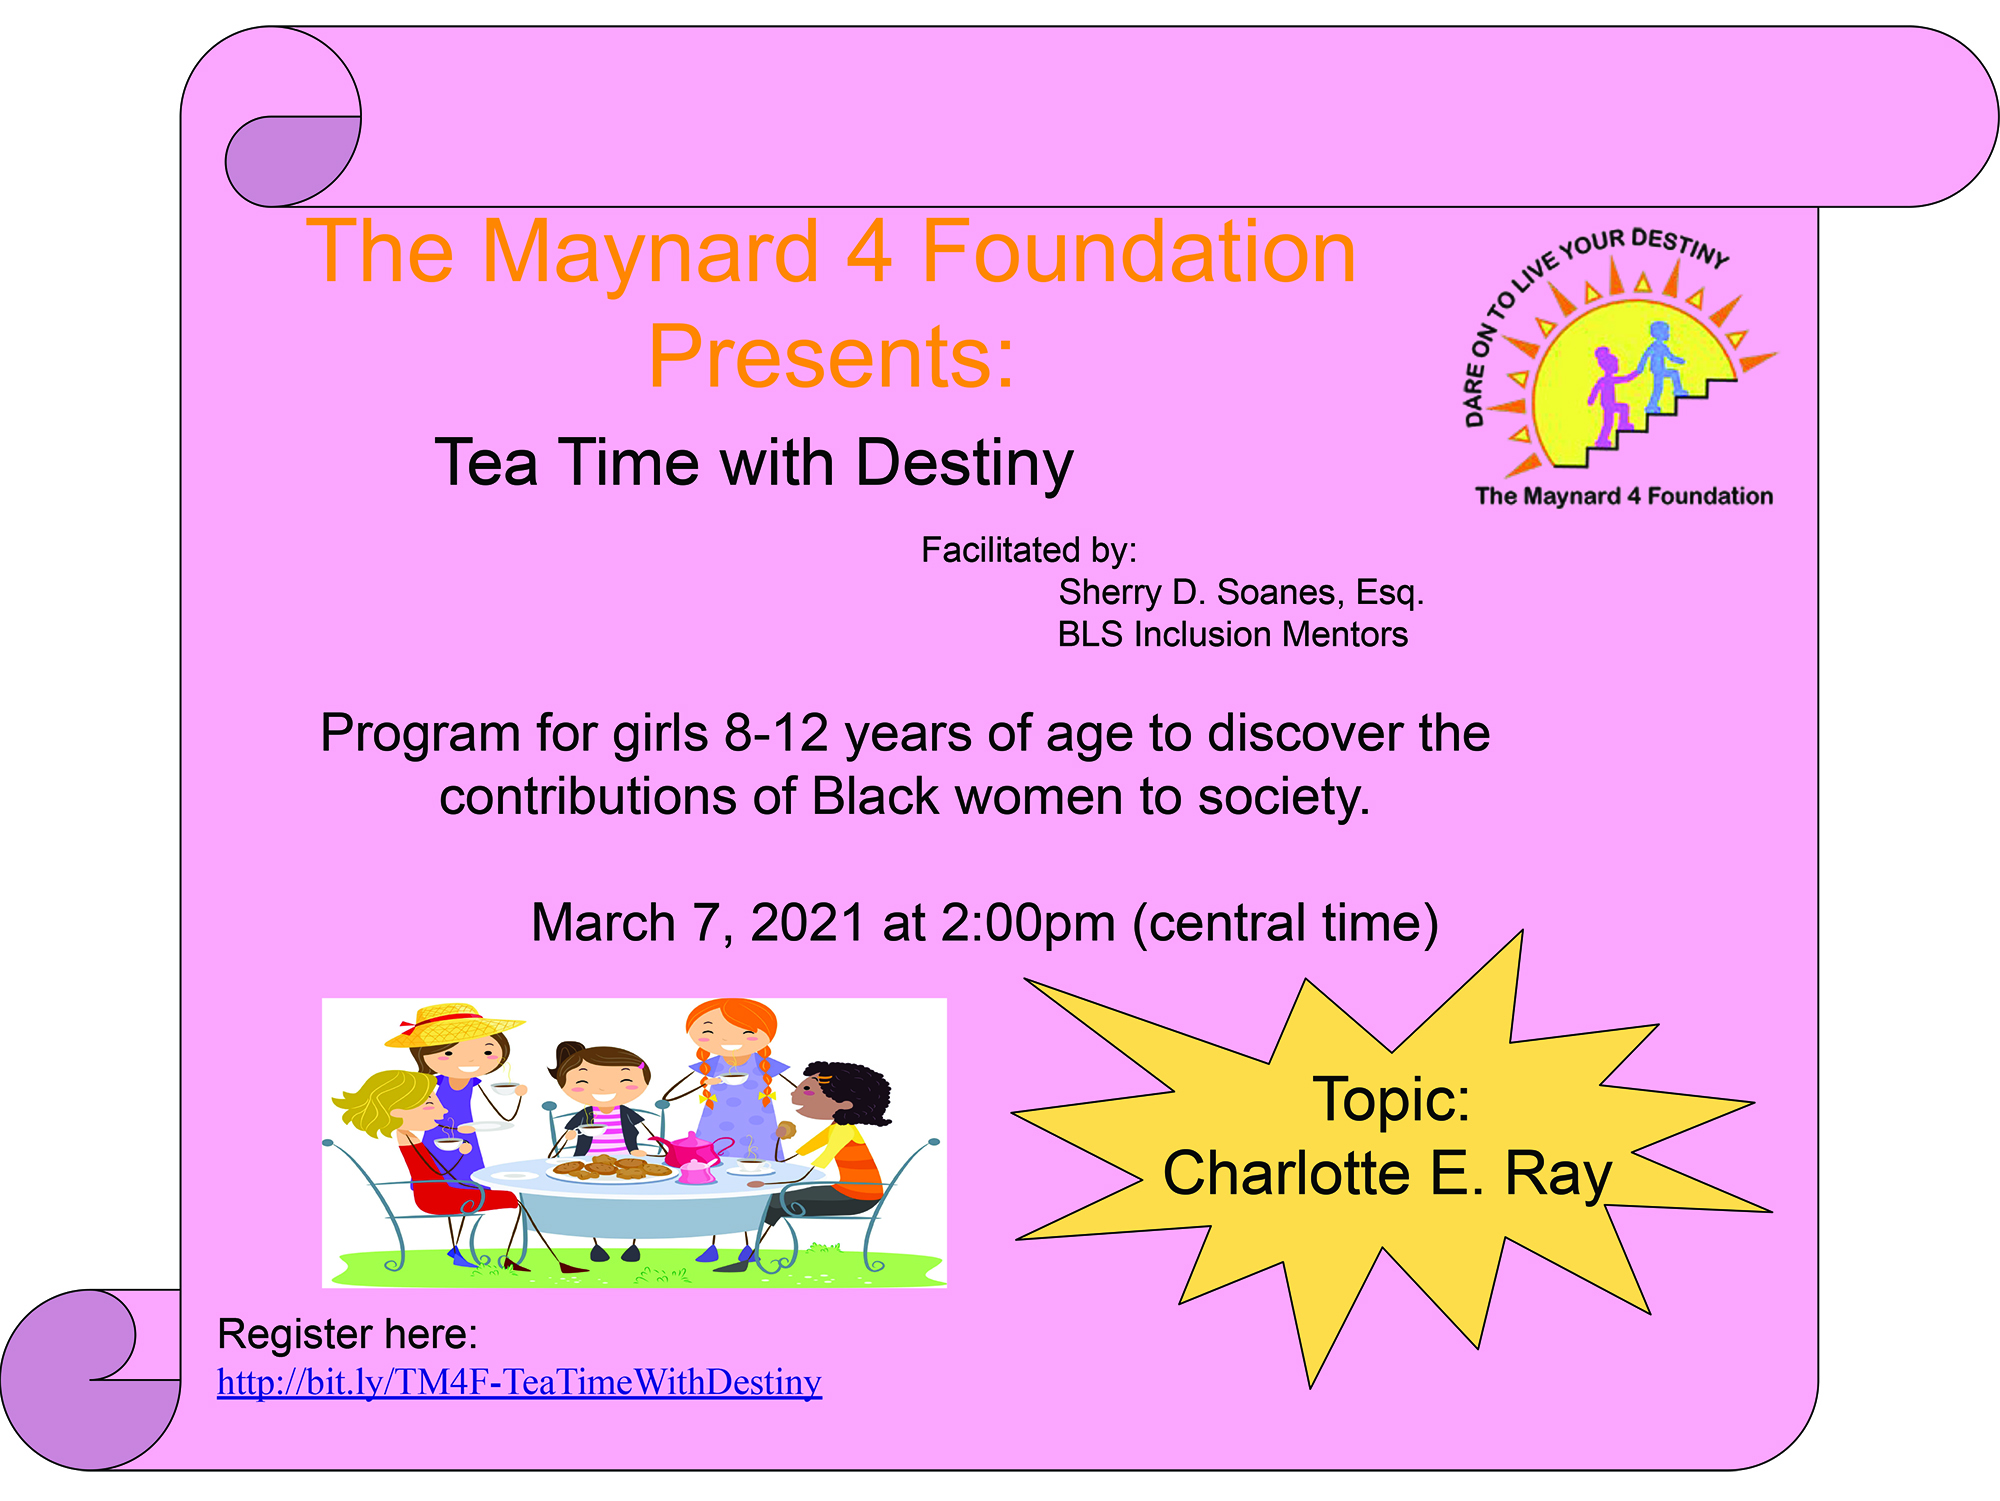 Tea Time with Destiny - The Maynard 4 Foundation - 2.22.21